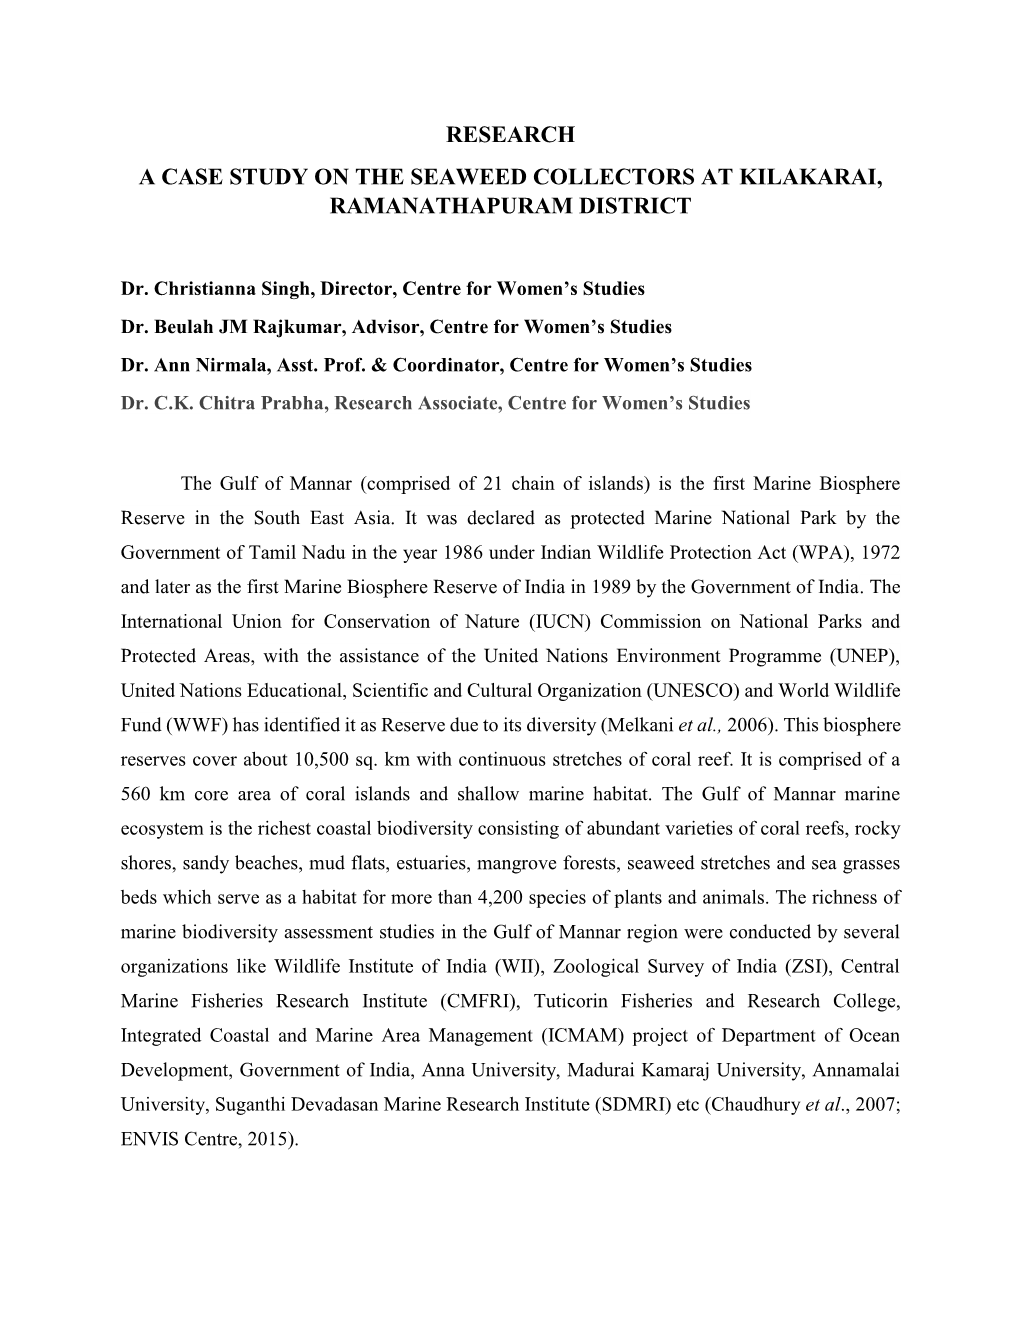 Research a Case Study on the Seaweed Collectors at Kilakarai, Ramanathapuram District